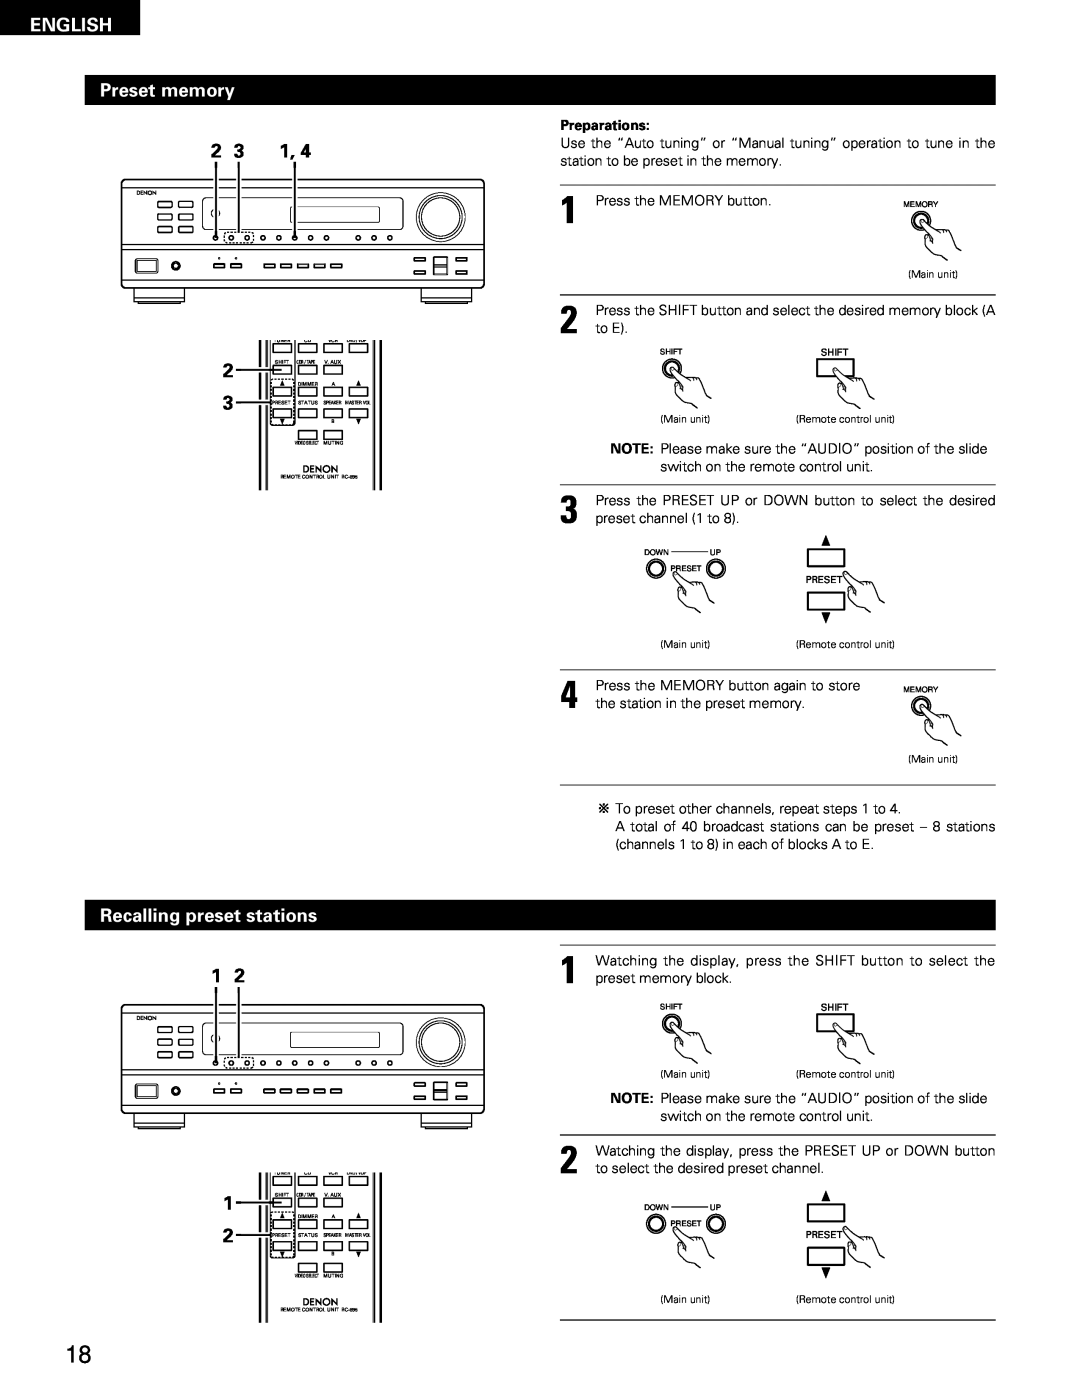 Denon DRA-295 manual ENGLISH Preset memory, Recalling preset stations 